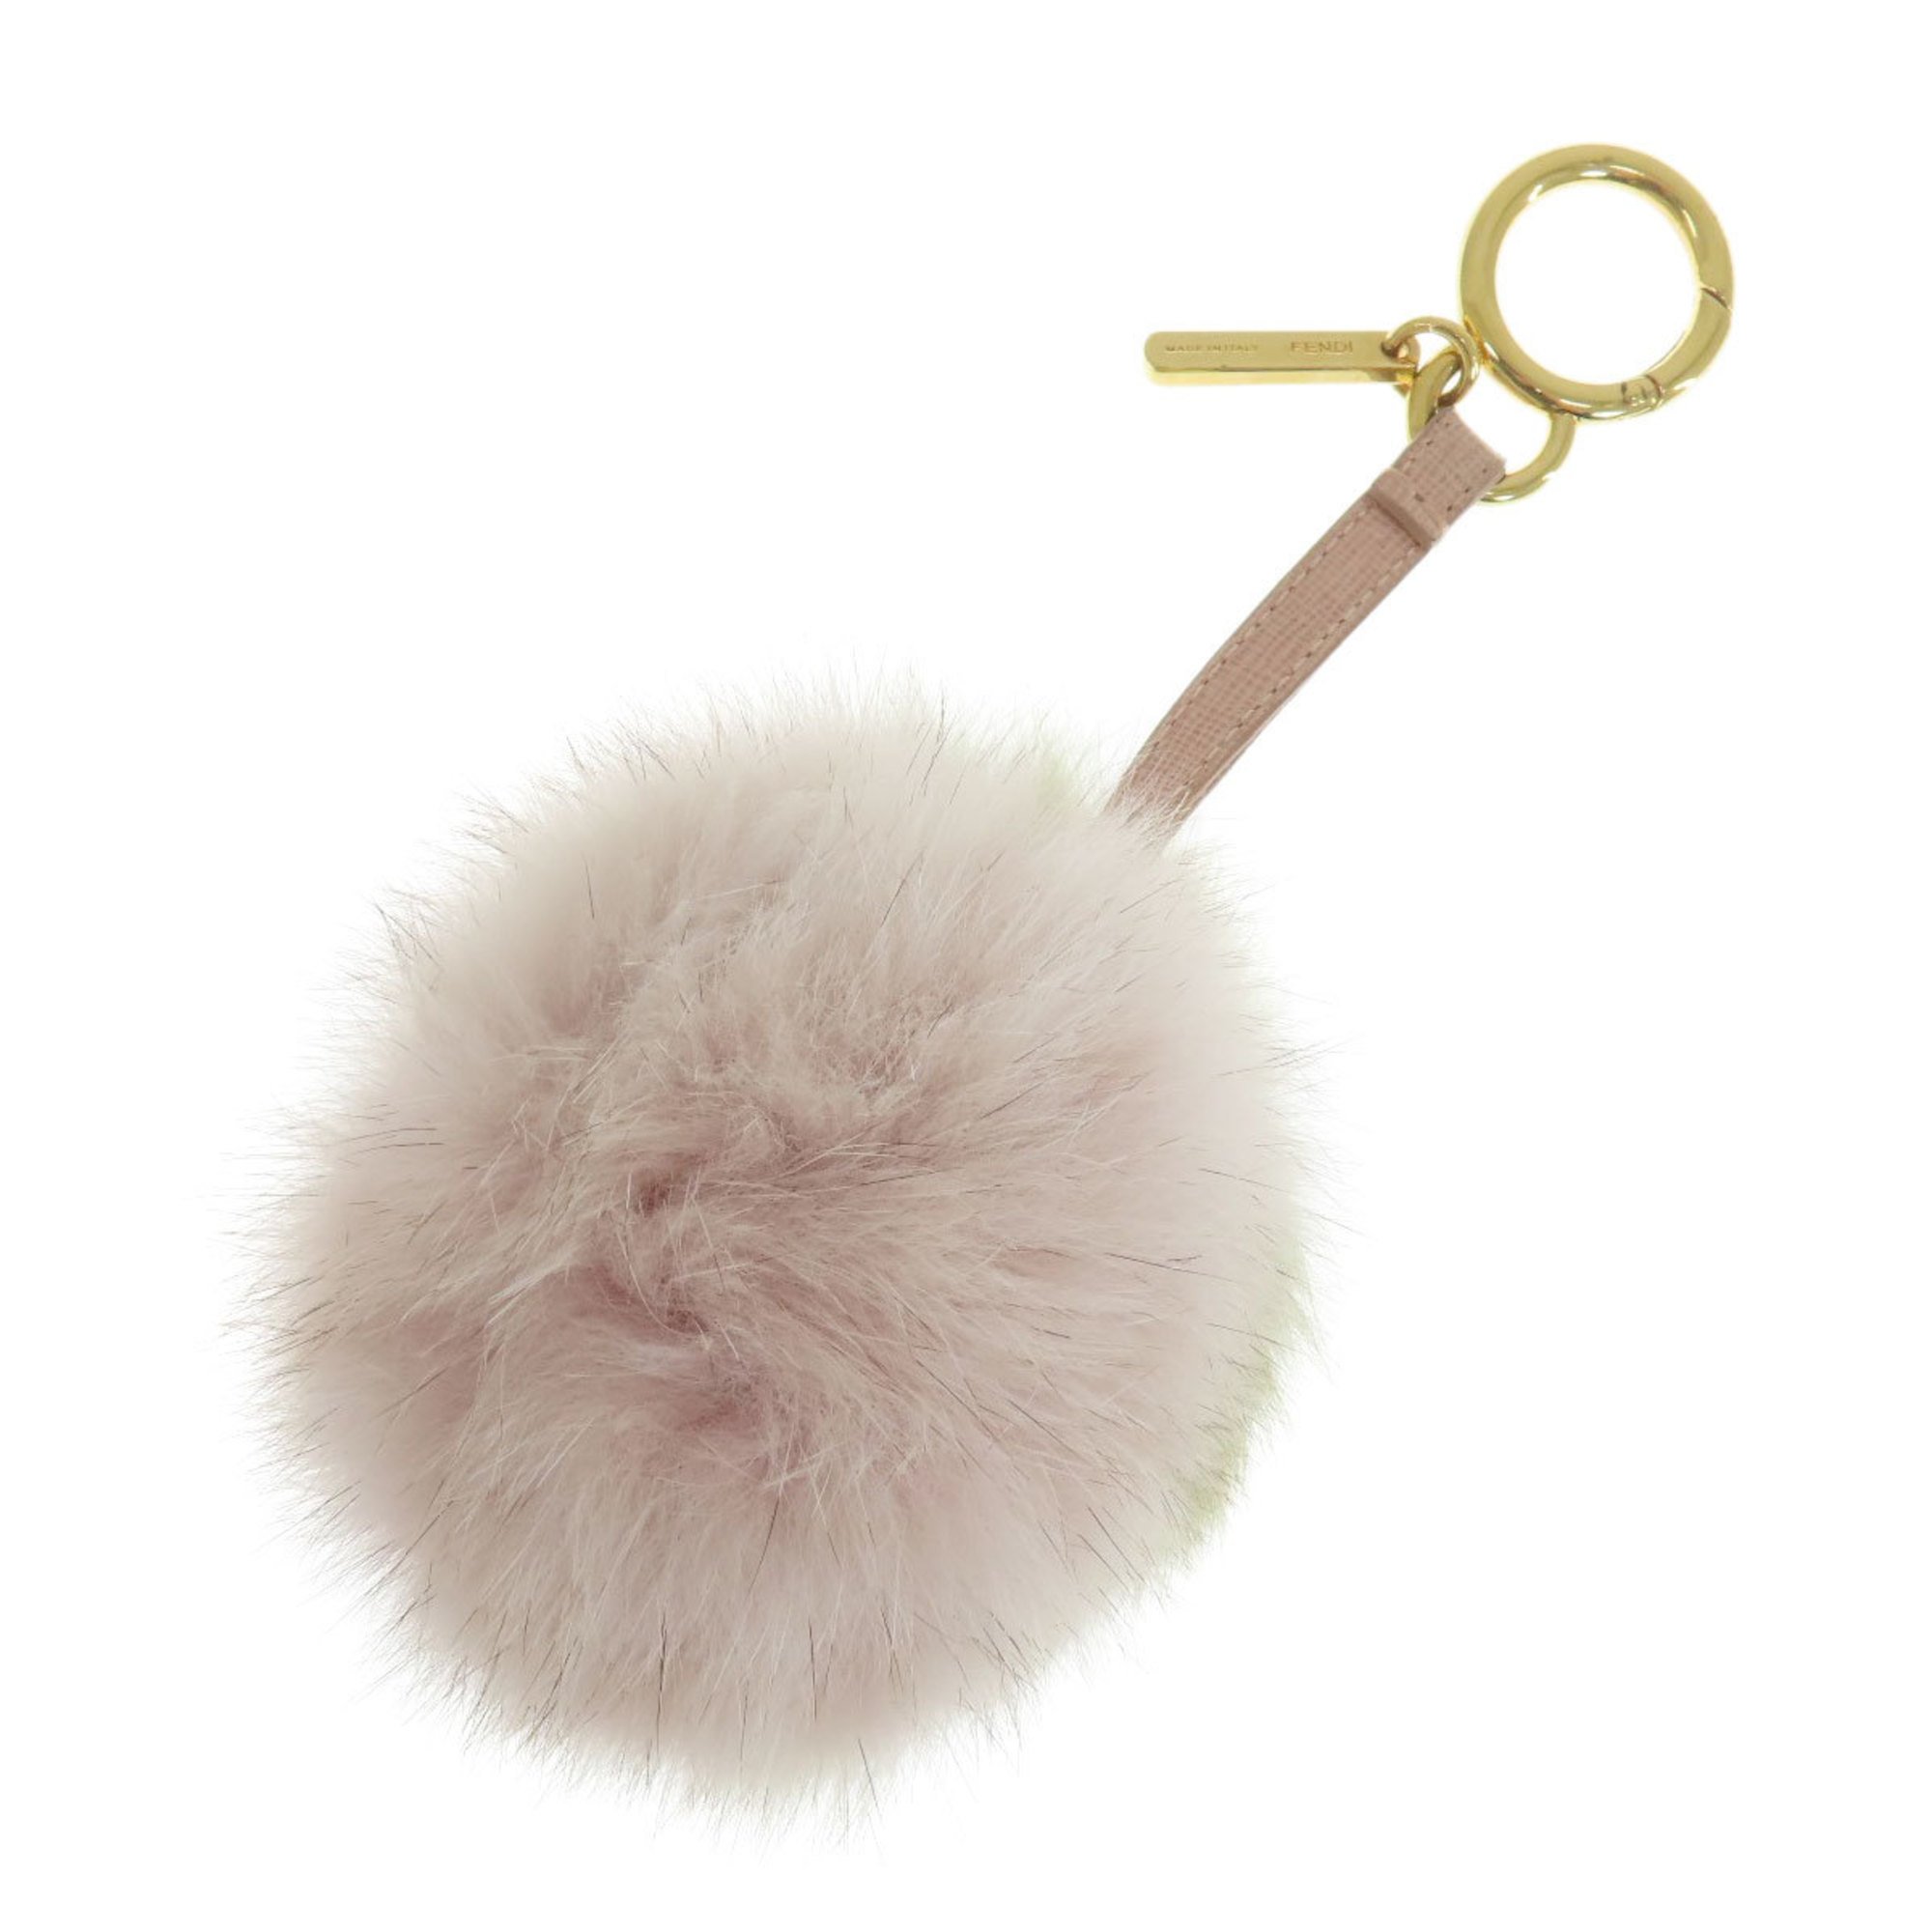 Fendi bag charm keychain fur for women